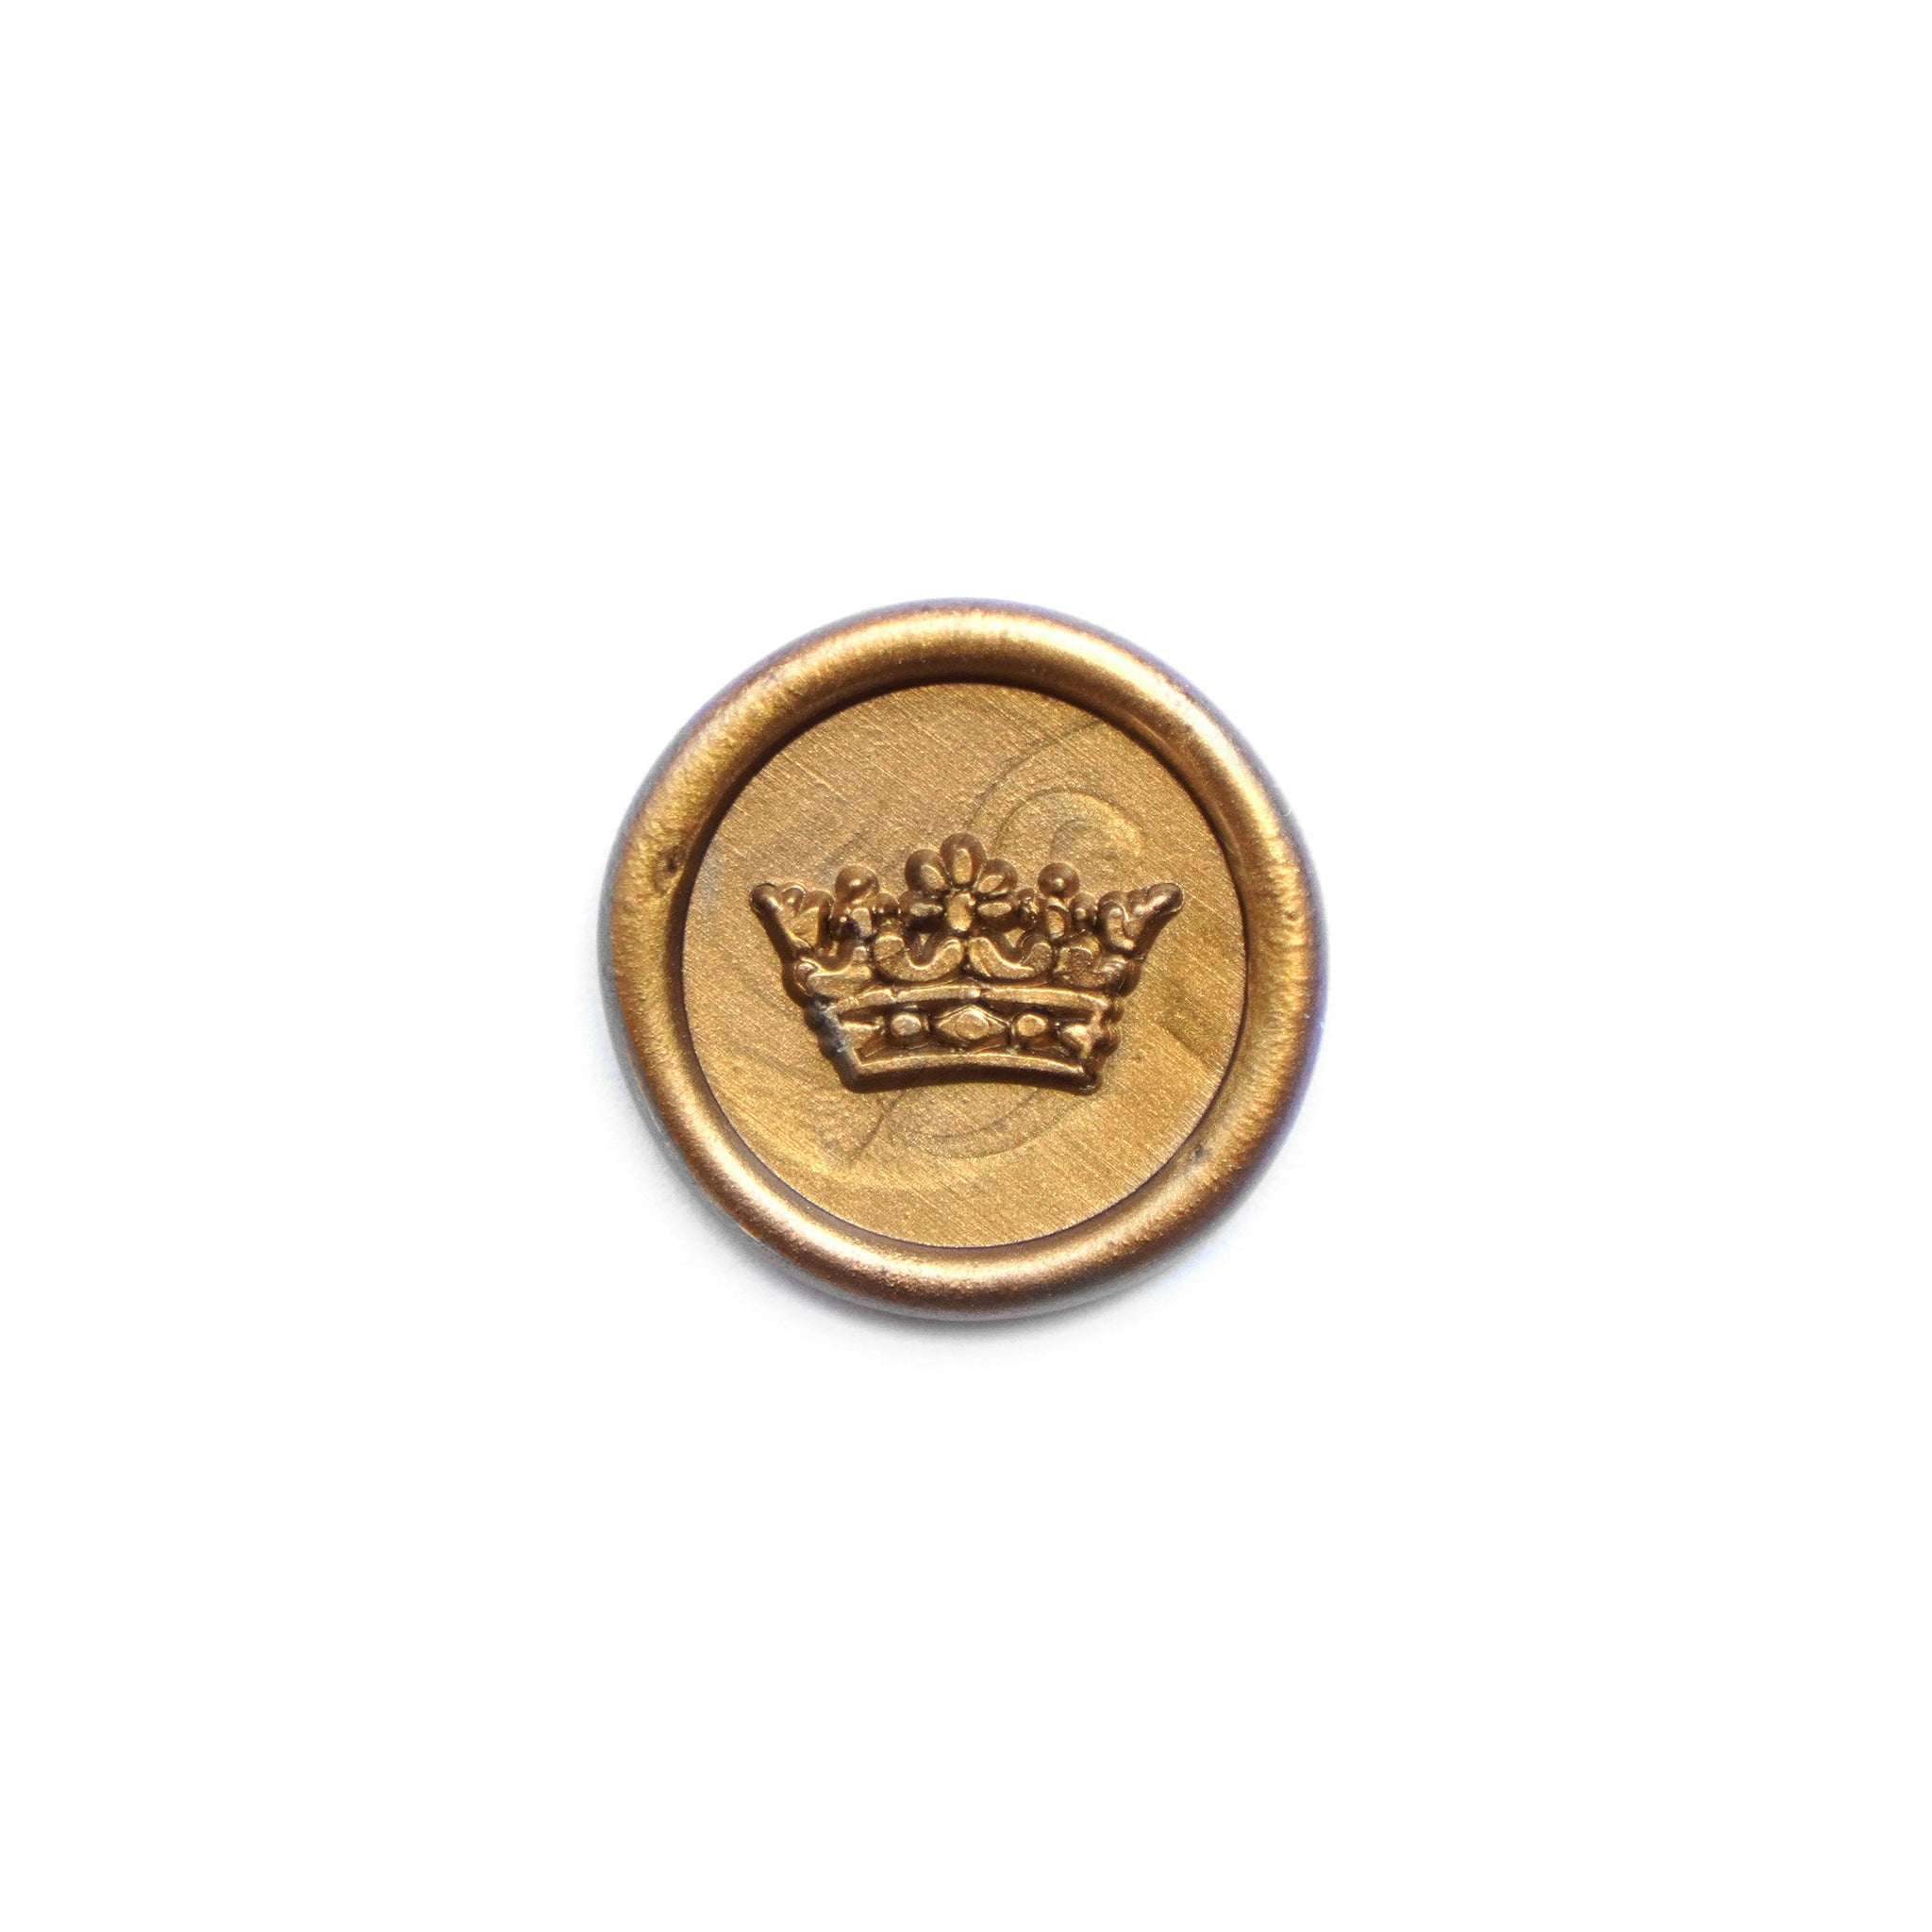 Wax sealing set, Crown stamp  Museum Webshop - Museum-webshop